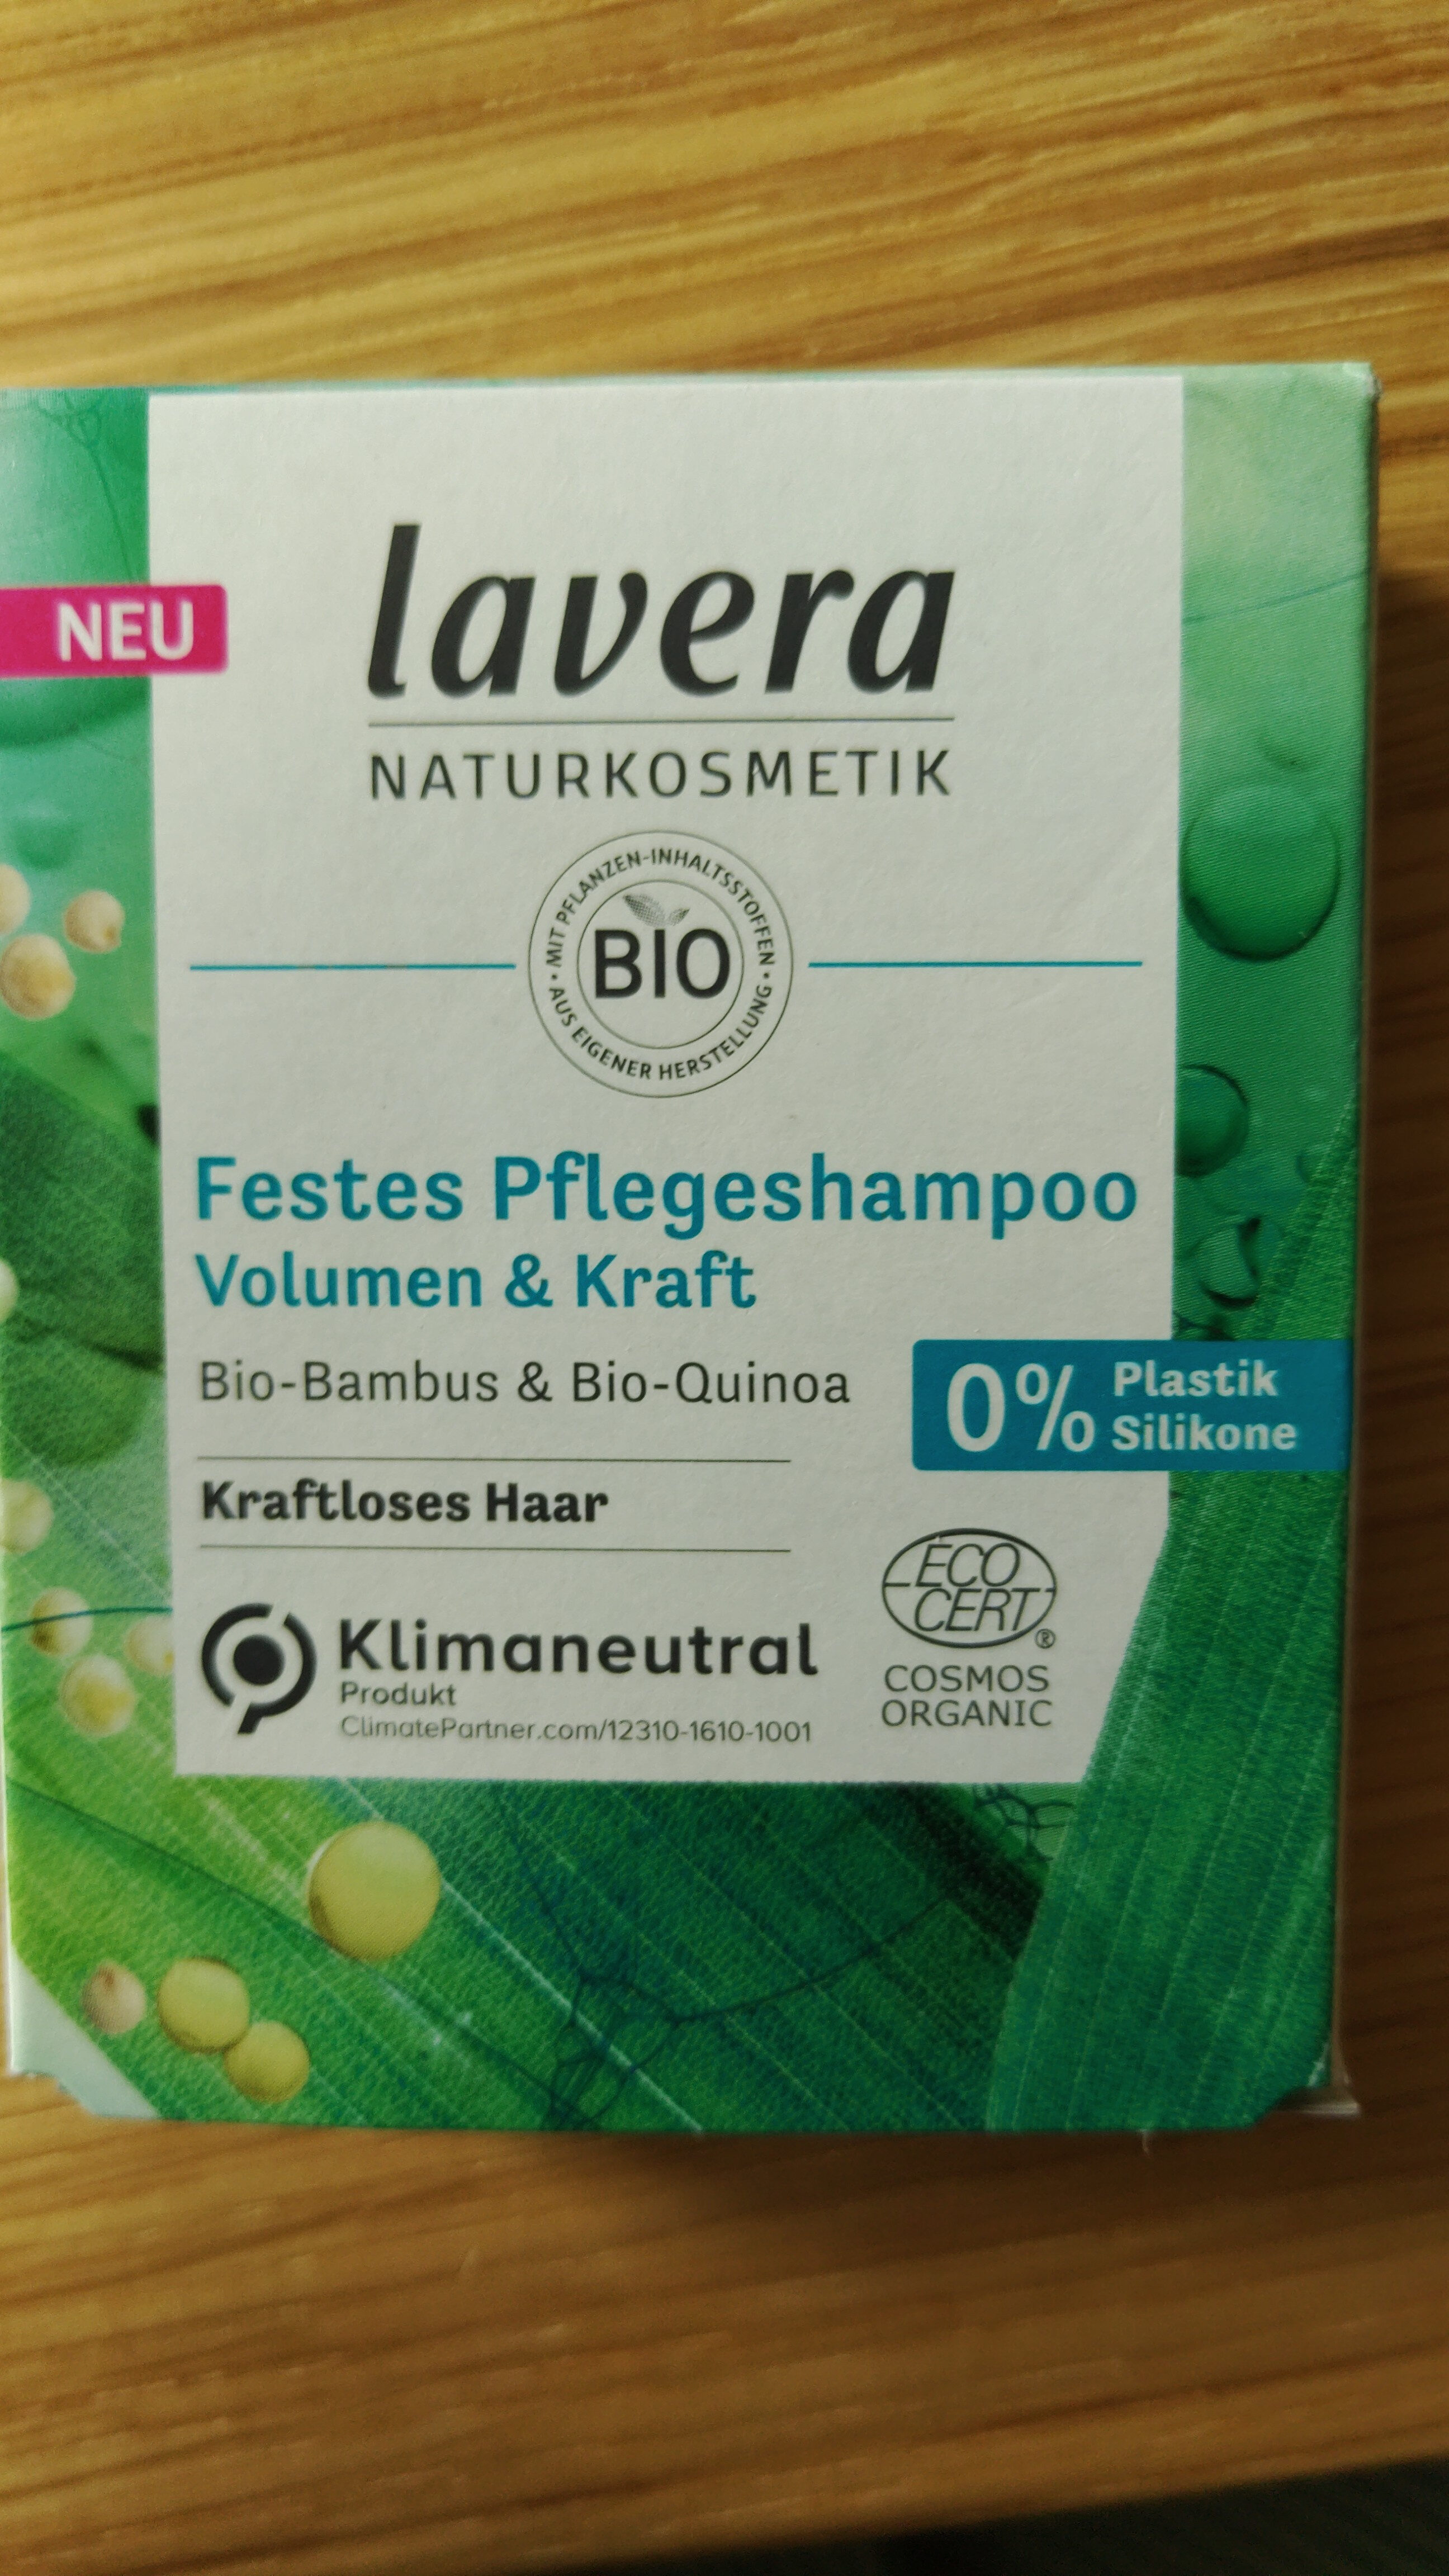 Festes Pflegeshampoo Volumen & Kraft - Product - de